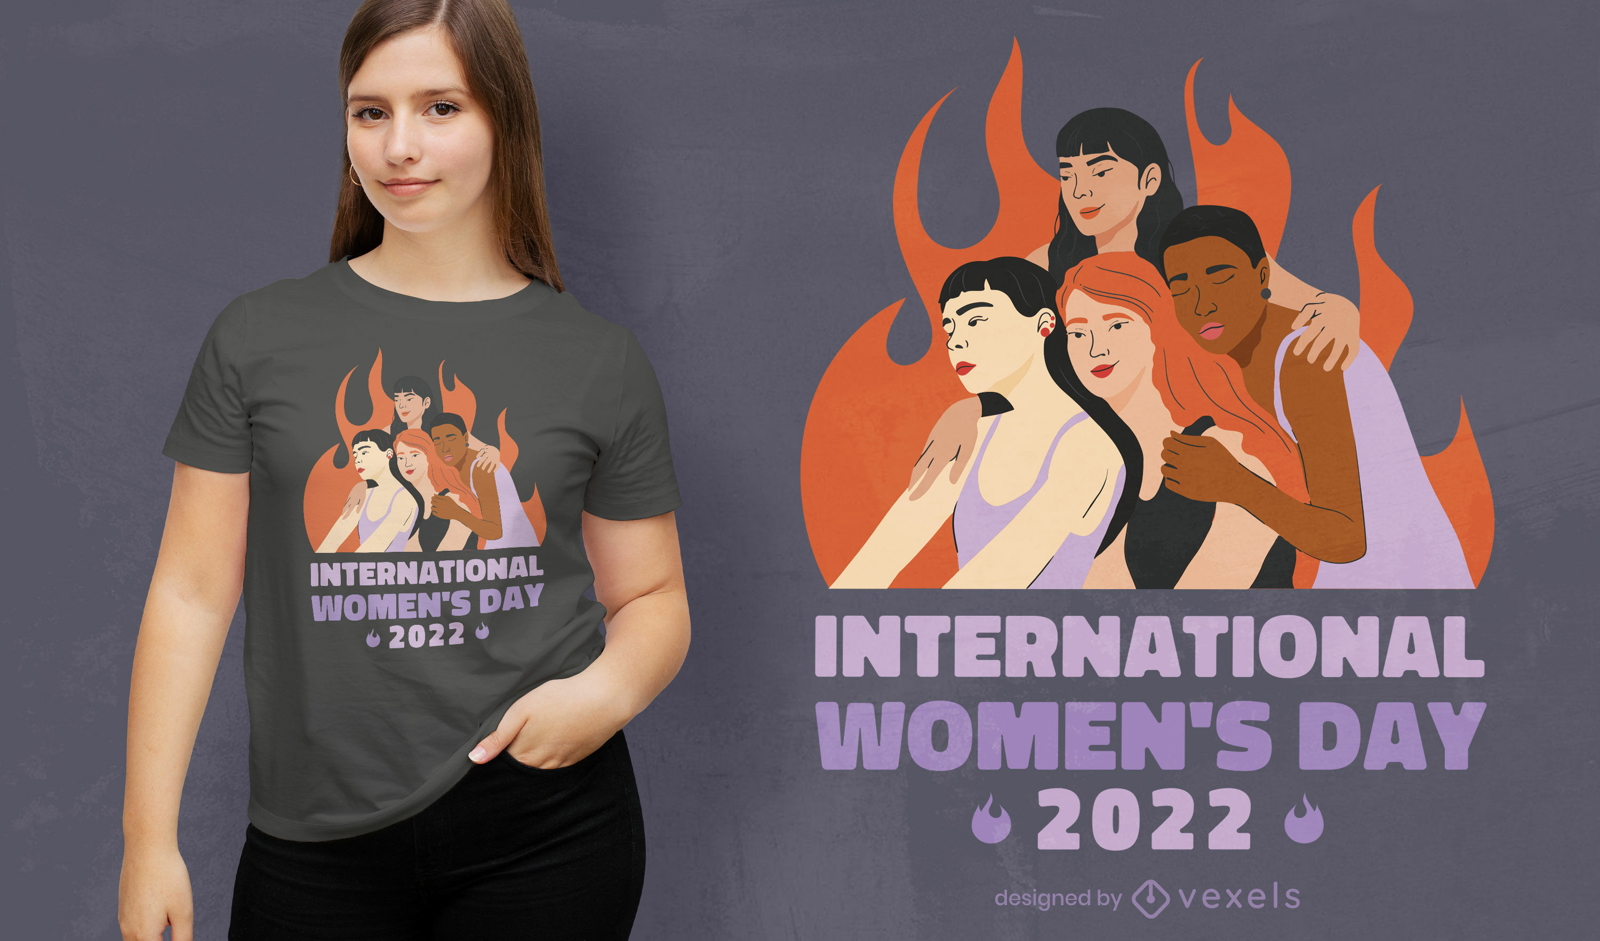 Dise?o de camiseta del D?a Internacional de la Mujer 2022.